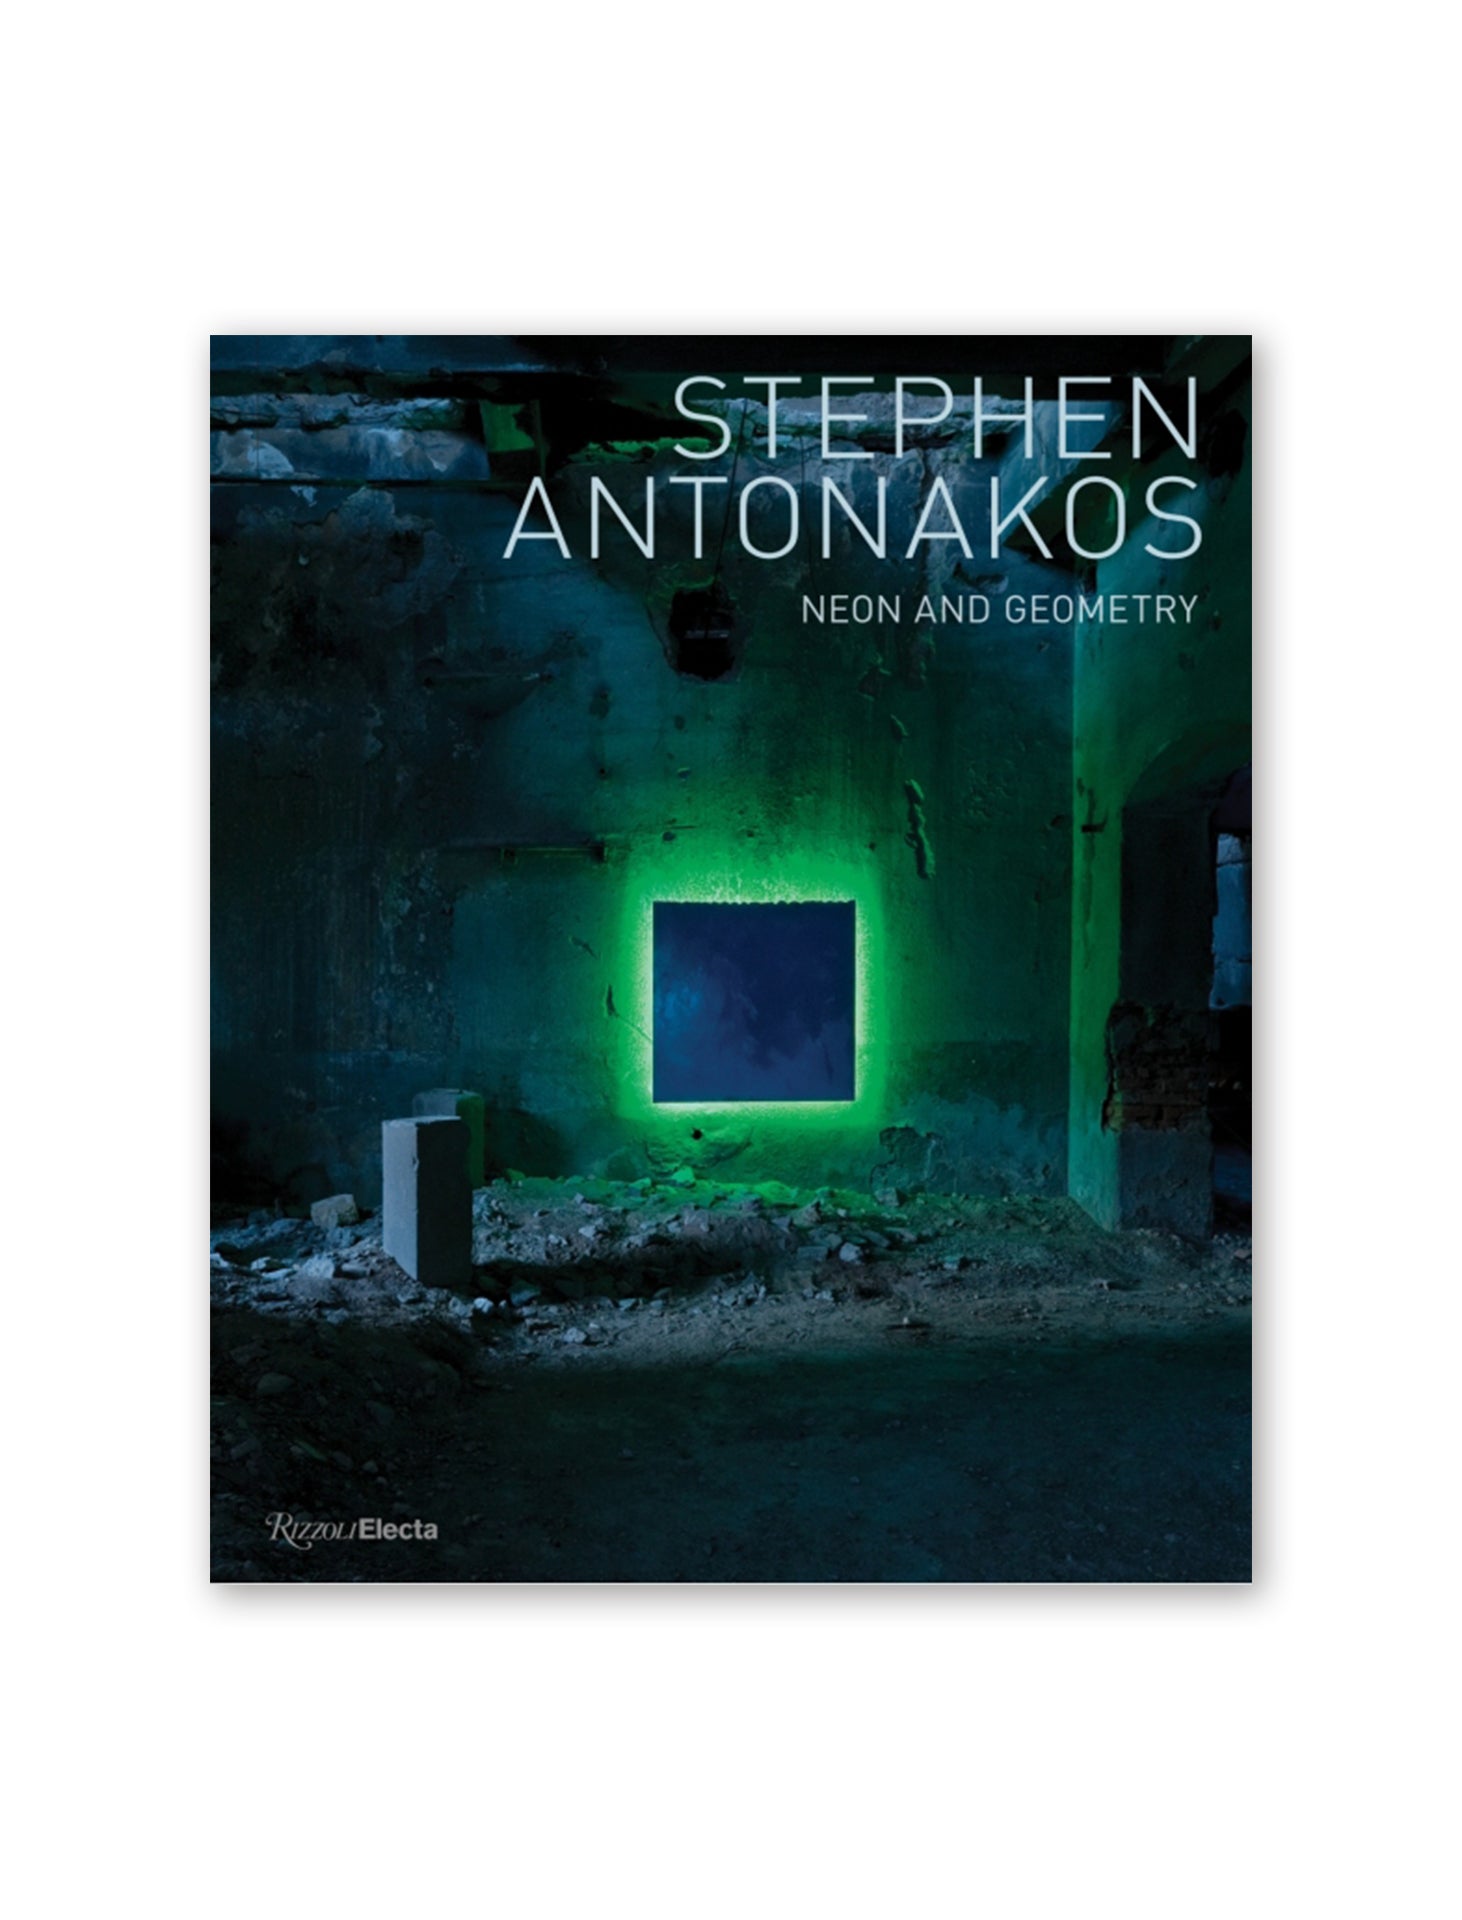 Stephen Antonakos: Neon and Geometry